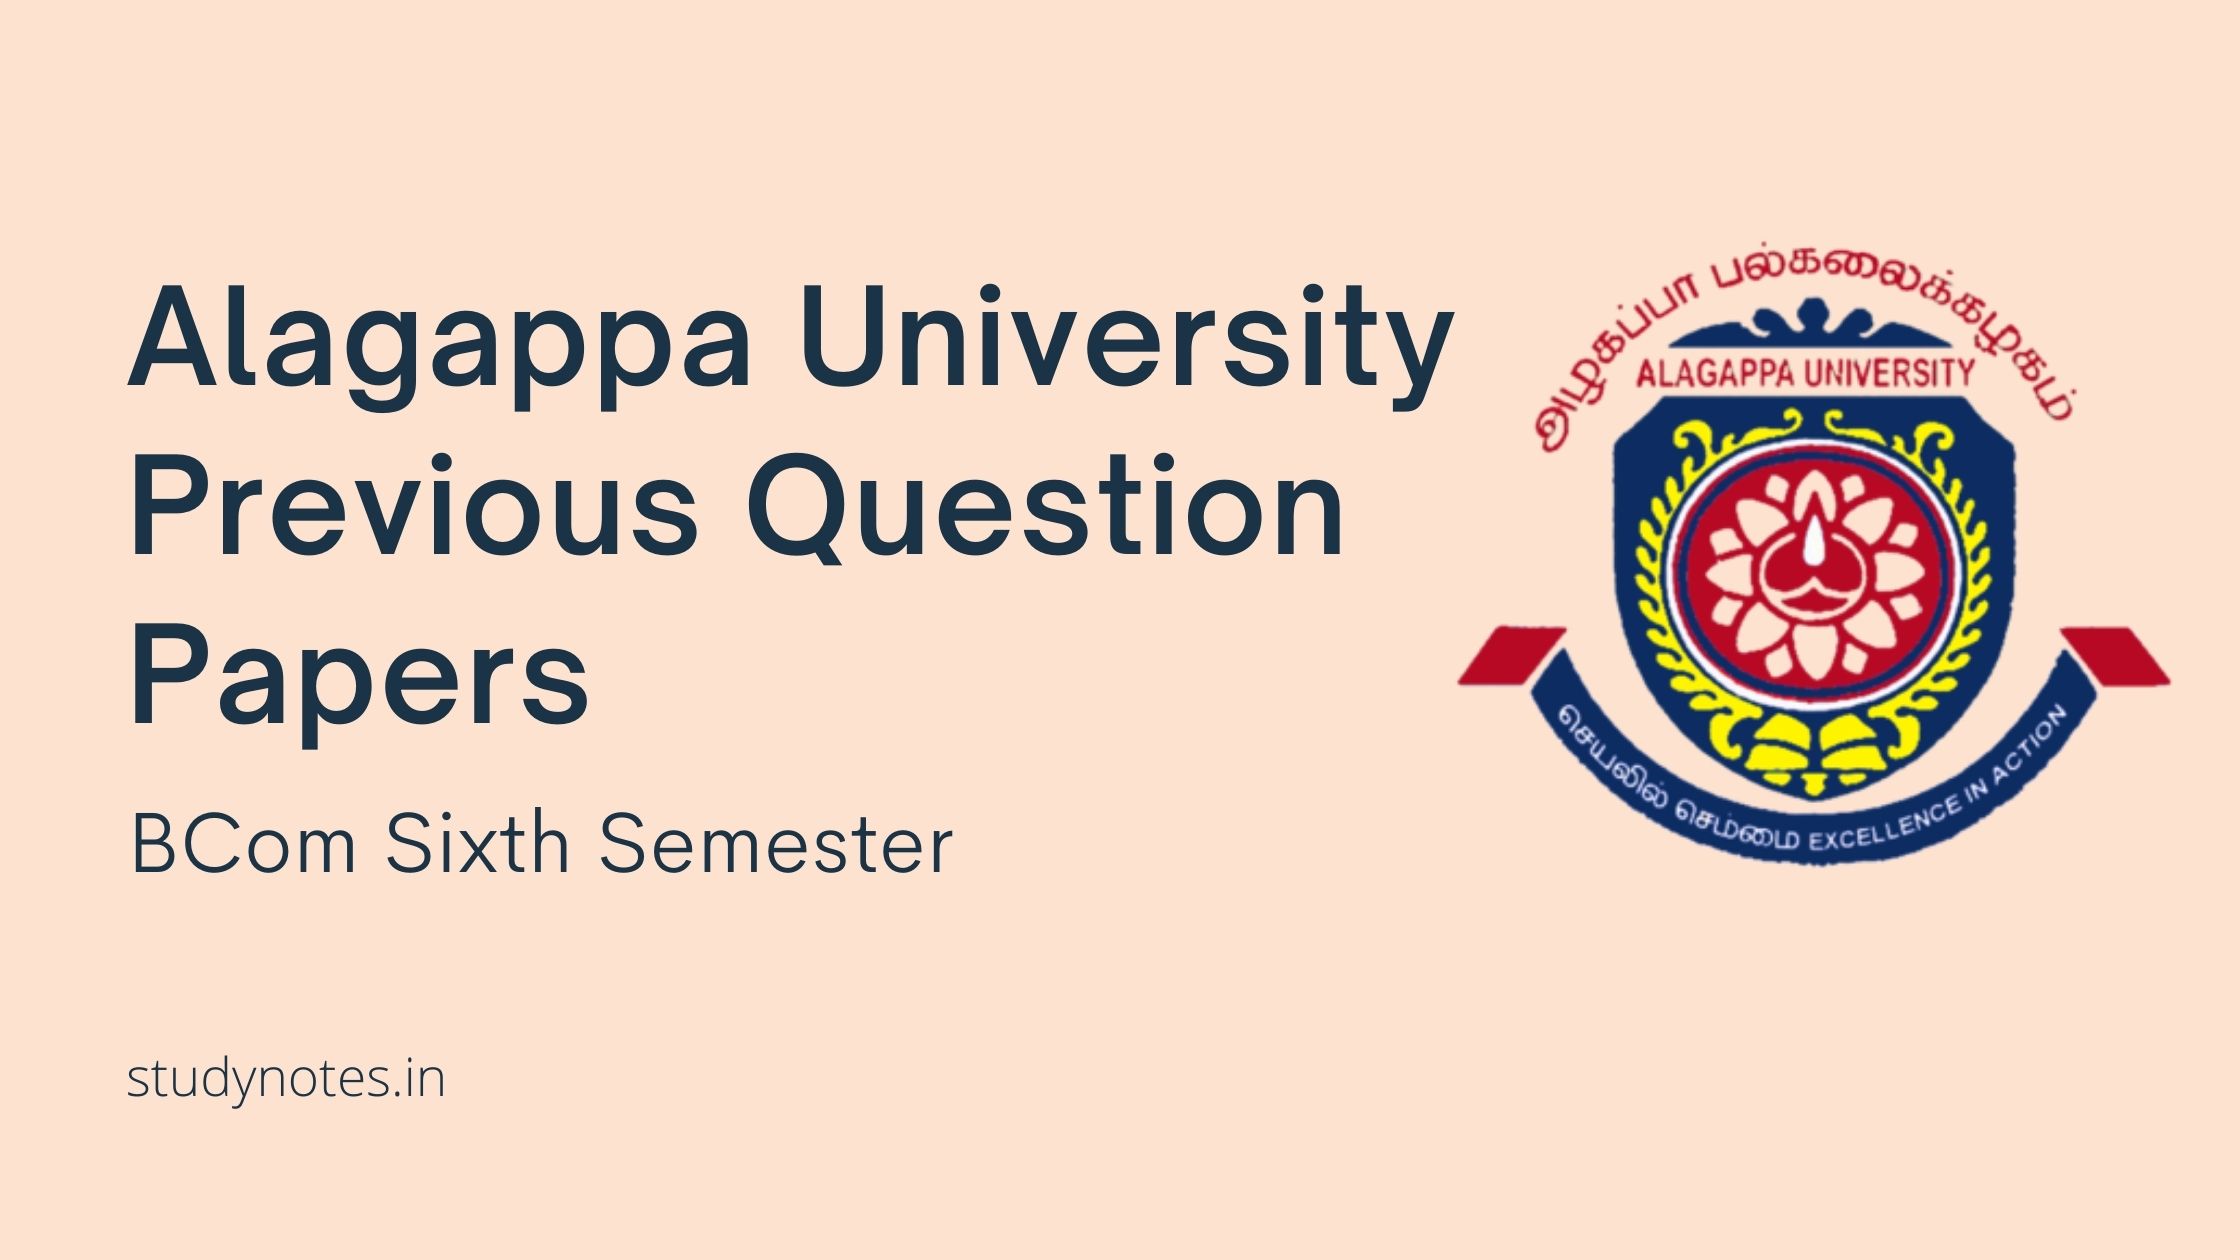 Alagappa University BCom Sixth Semester Previous Question Paper